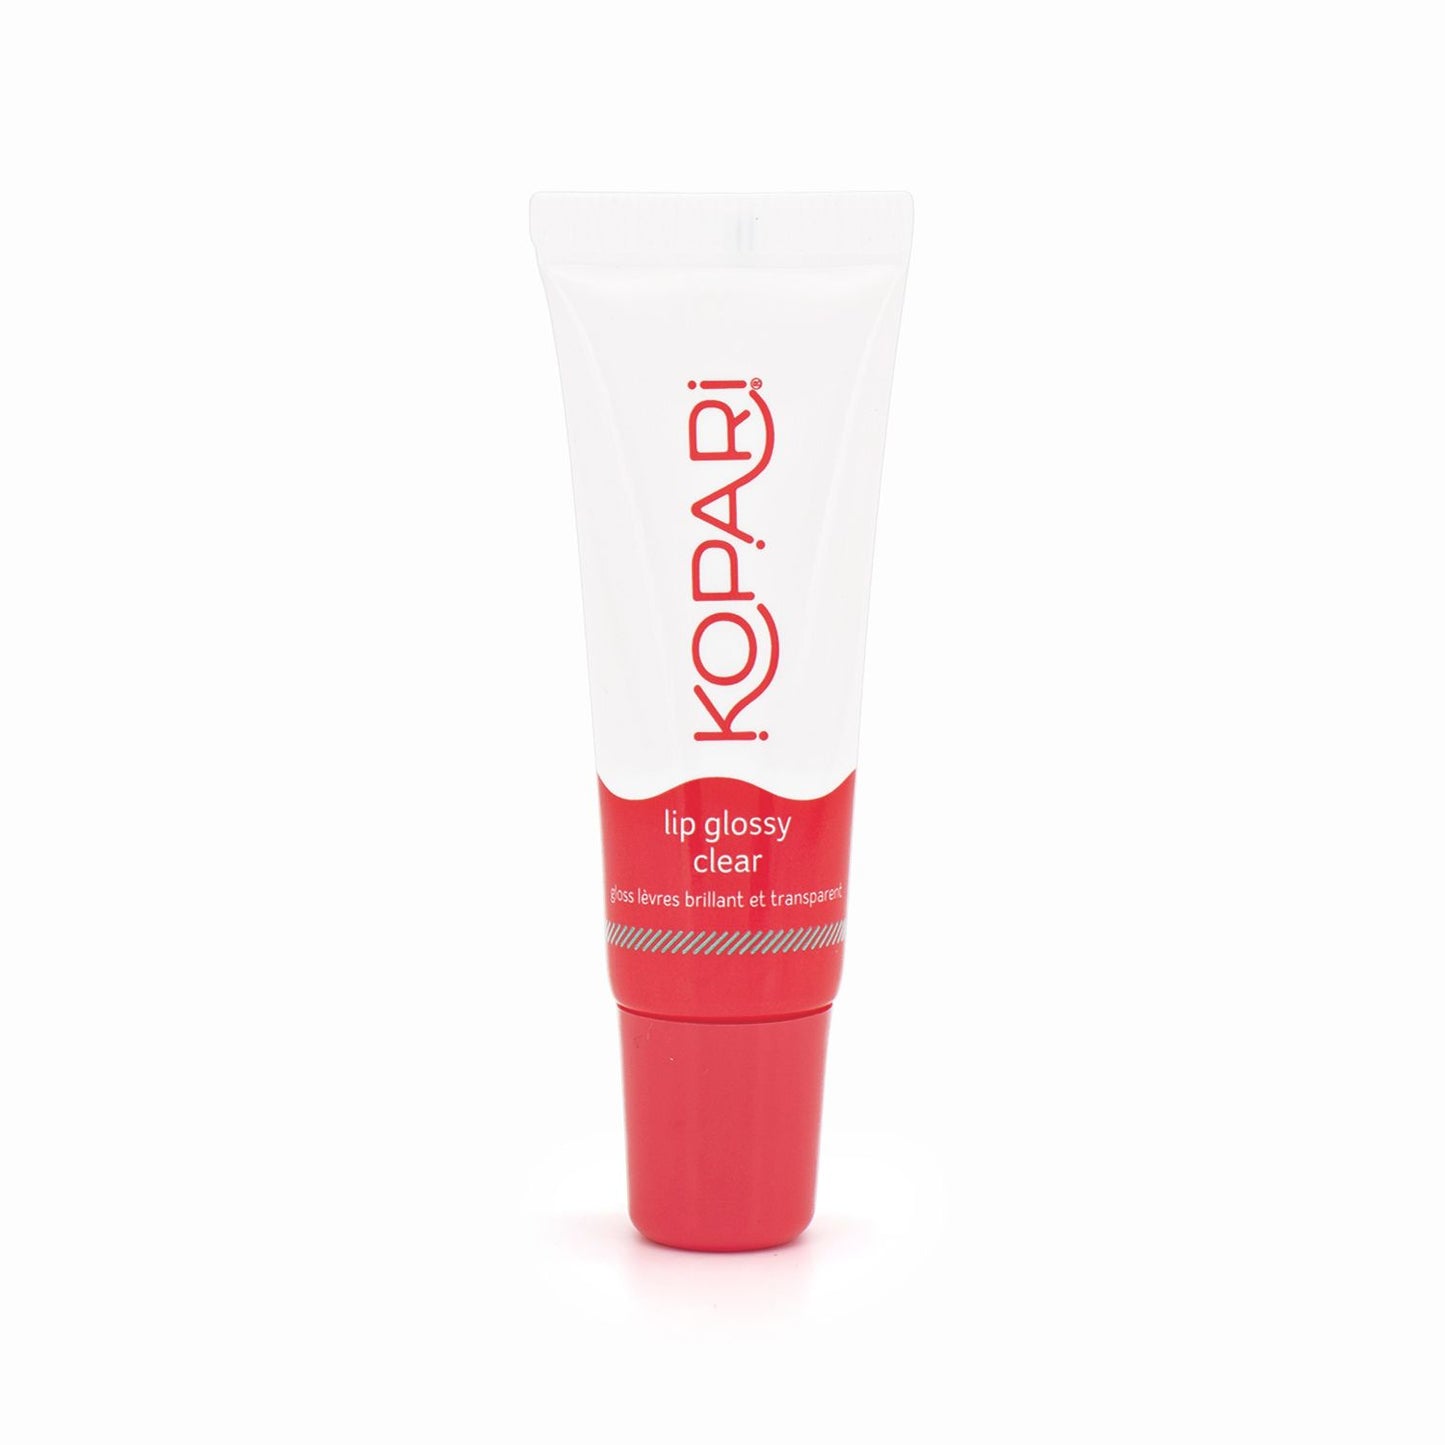 Kopari Beauty Moisturizing Lip Glossy 10g Clear - Imperfect Box